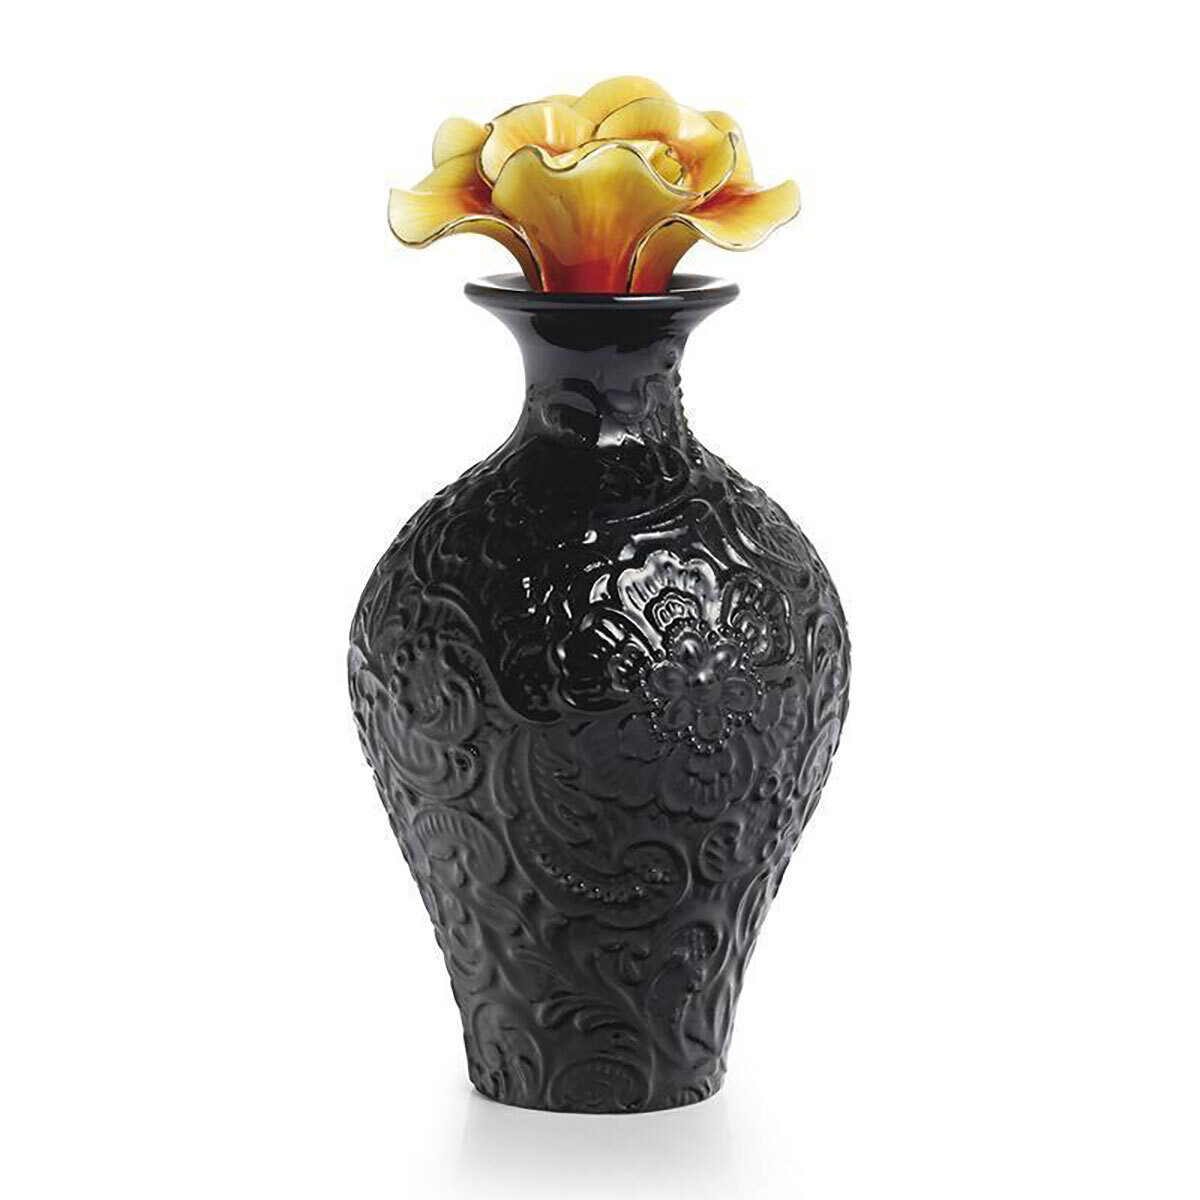 Franz Porcelain Fragrant Flowerblack With Yellow Flower Perfume Bottle FZ02153